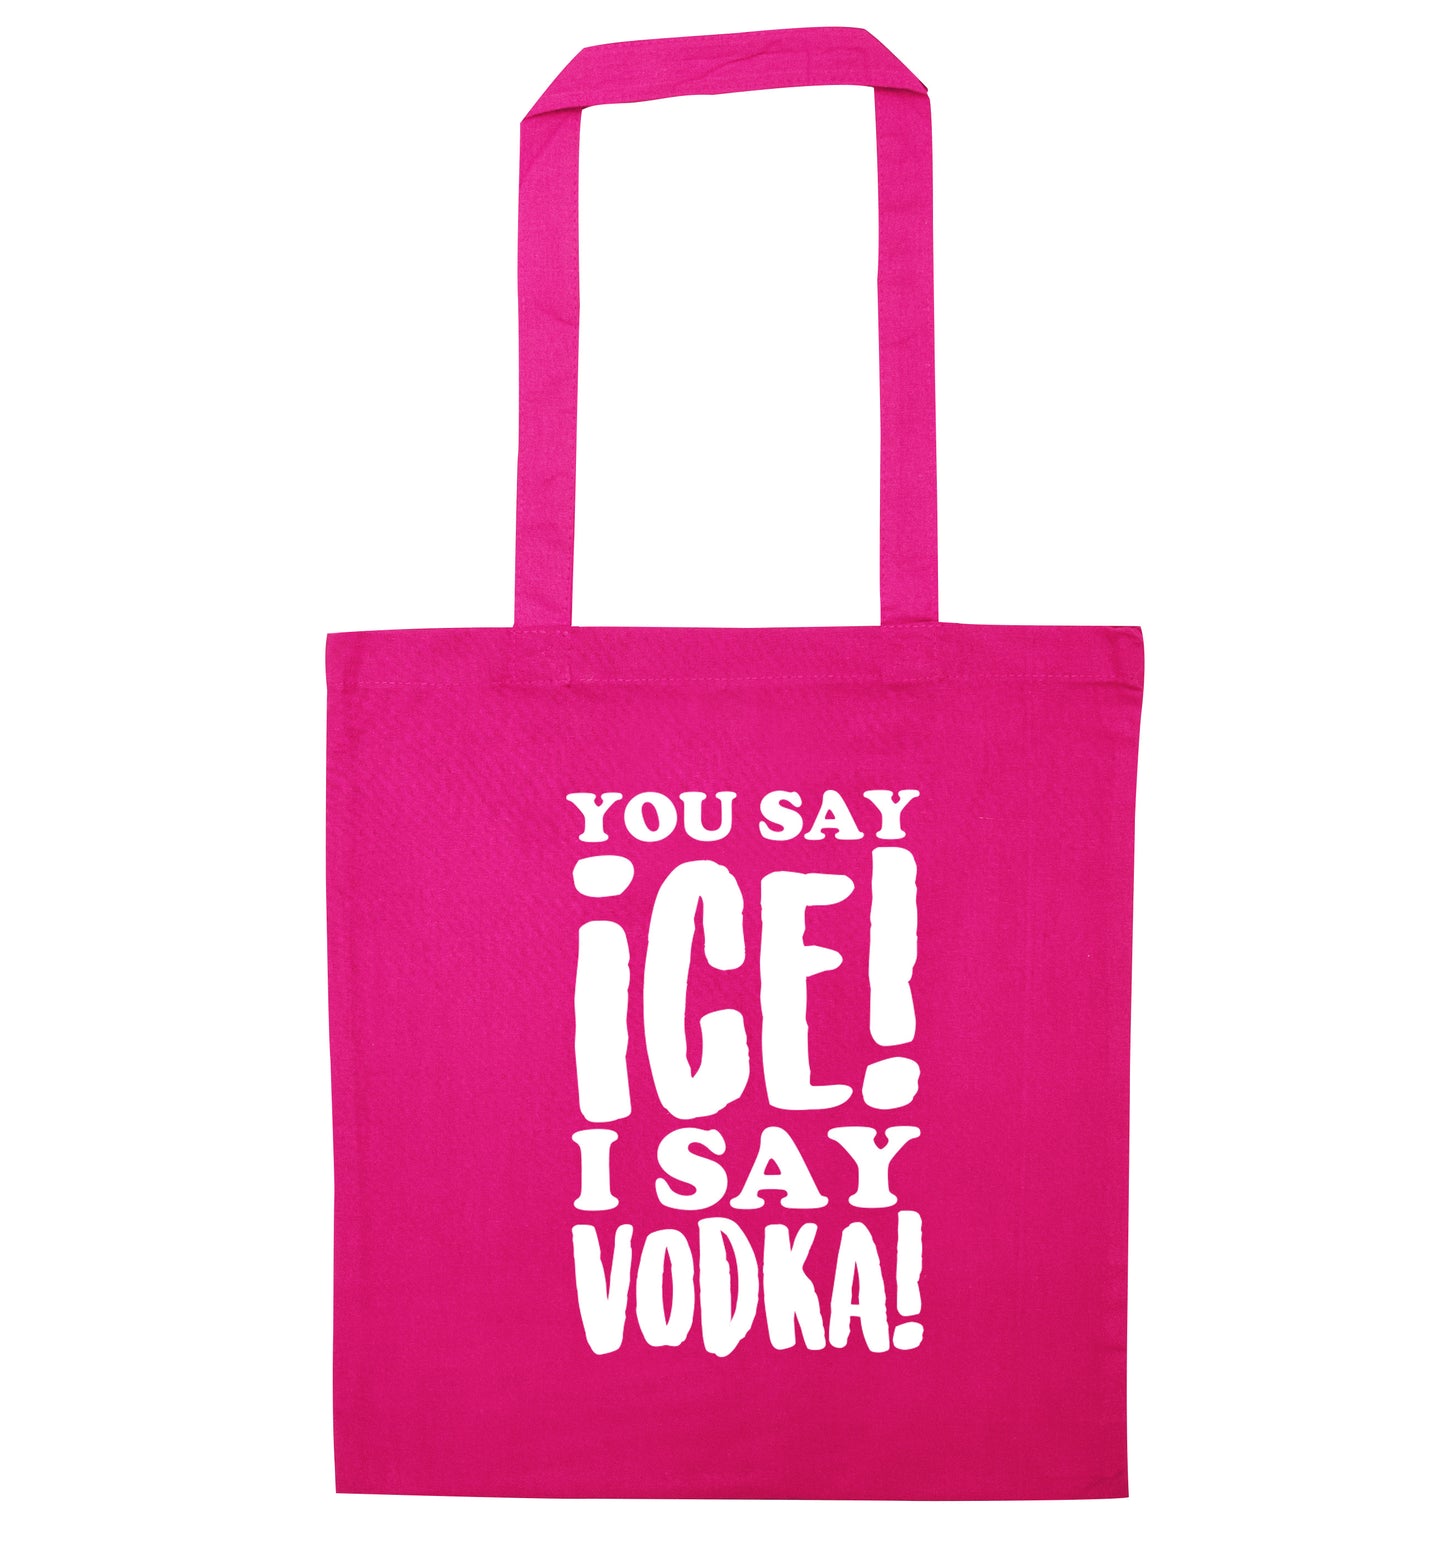 You say ice I say vodka! pink tote bag